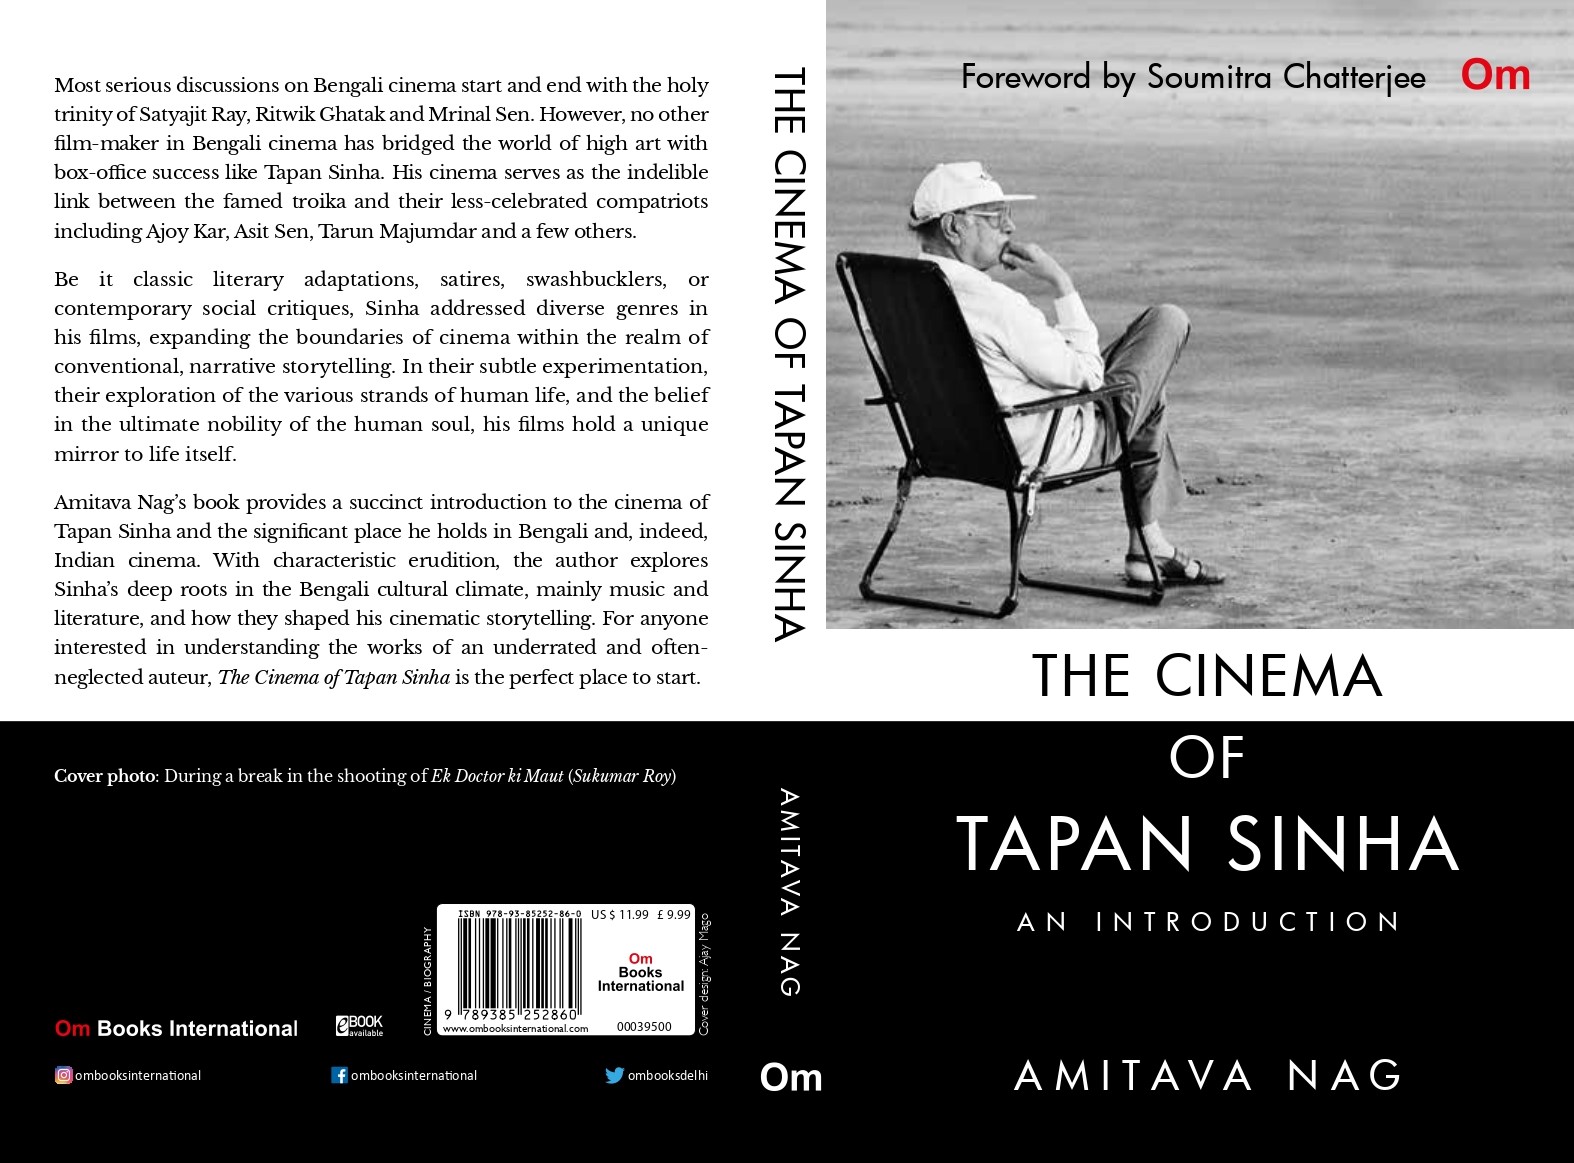 The Cinema of Tapan Sinha, An Introduction